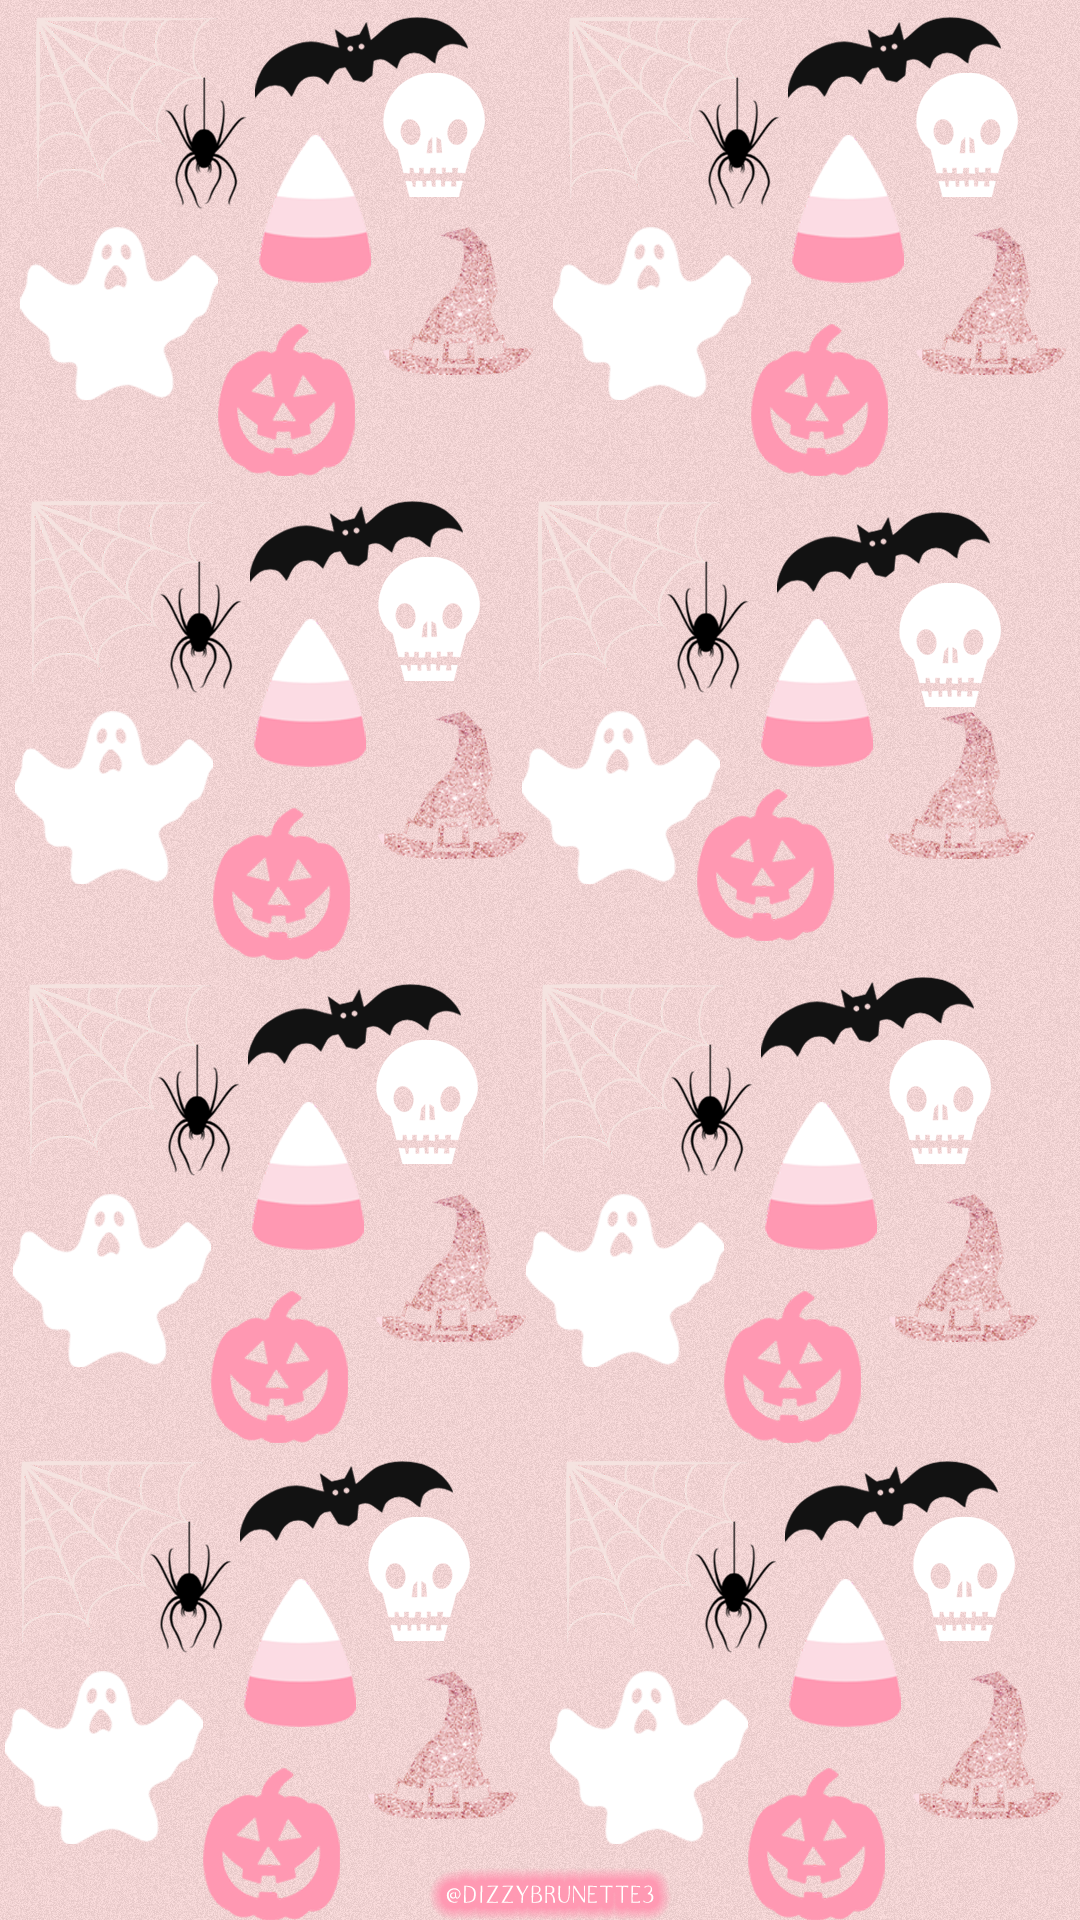 More Cute Halloween Wallpaper!. Halloween wallpaper iphone, Halloween wallpaper cute, Cute fall wallpaper